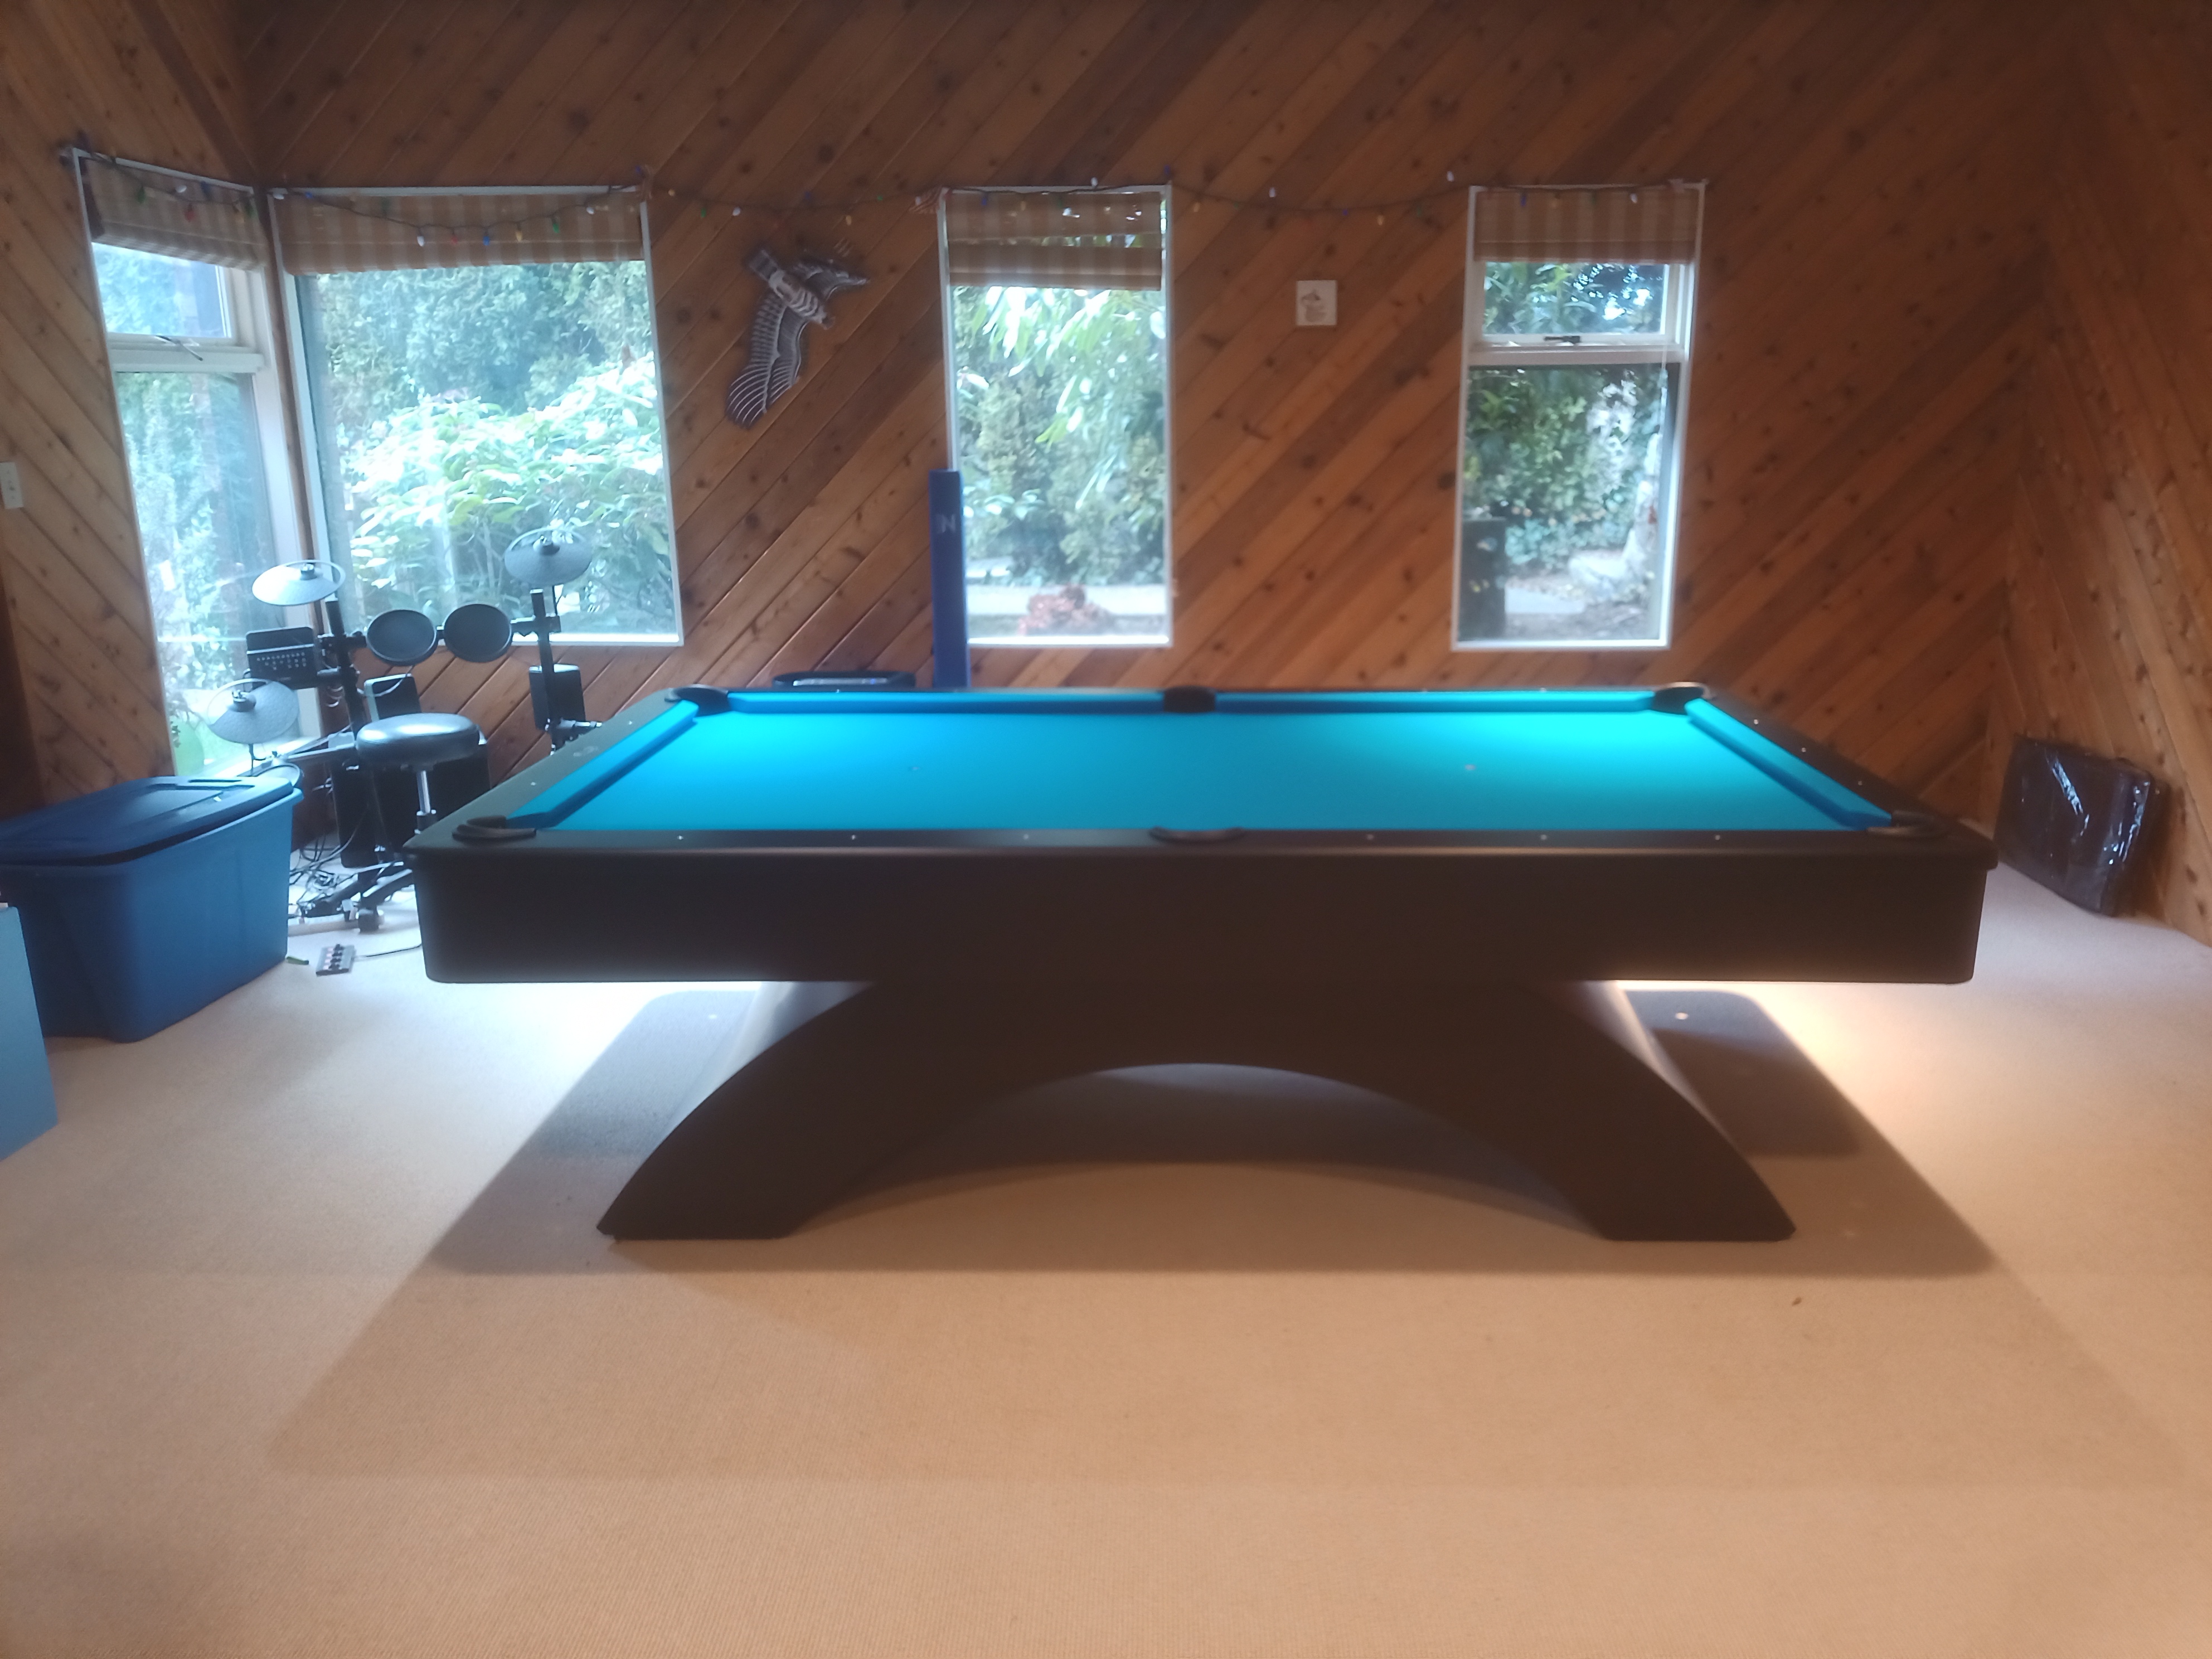 Green felt pool table in wood panelled room